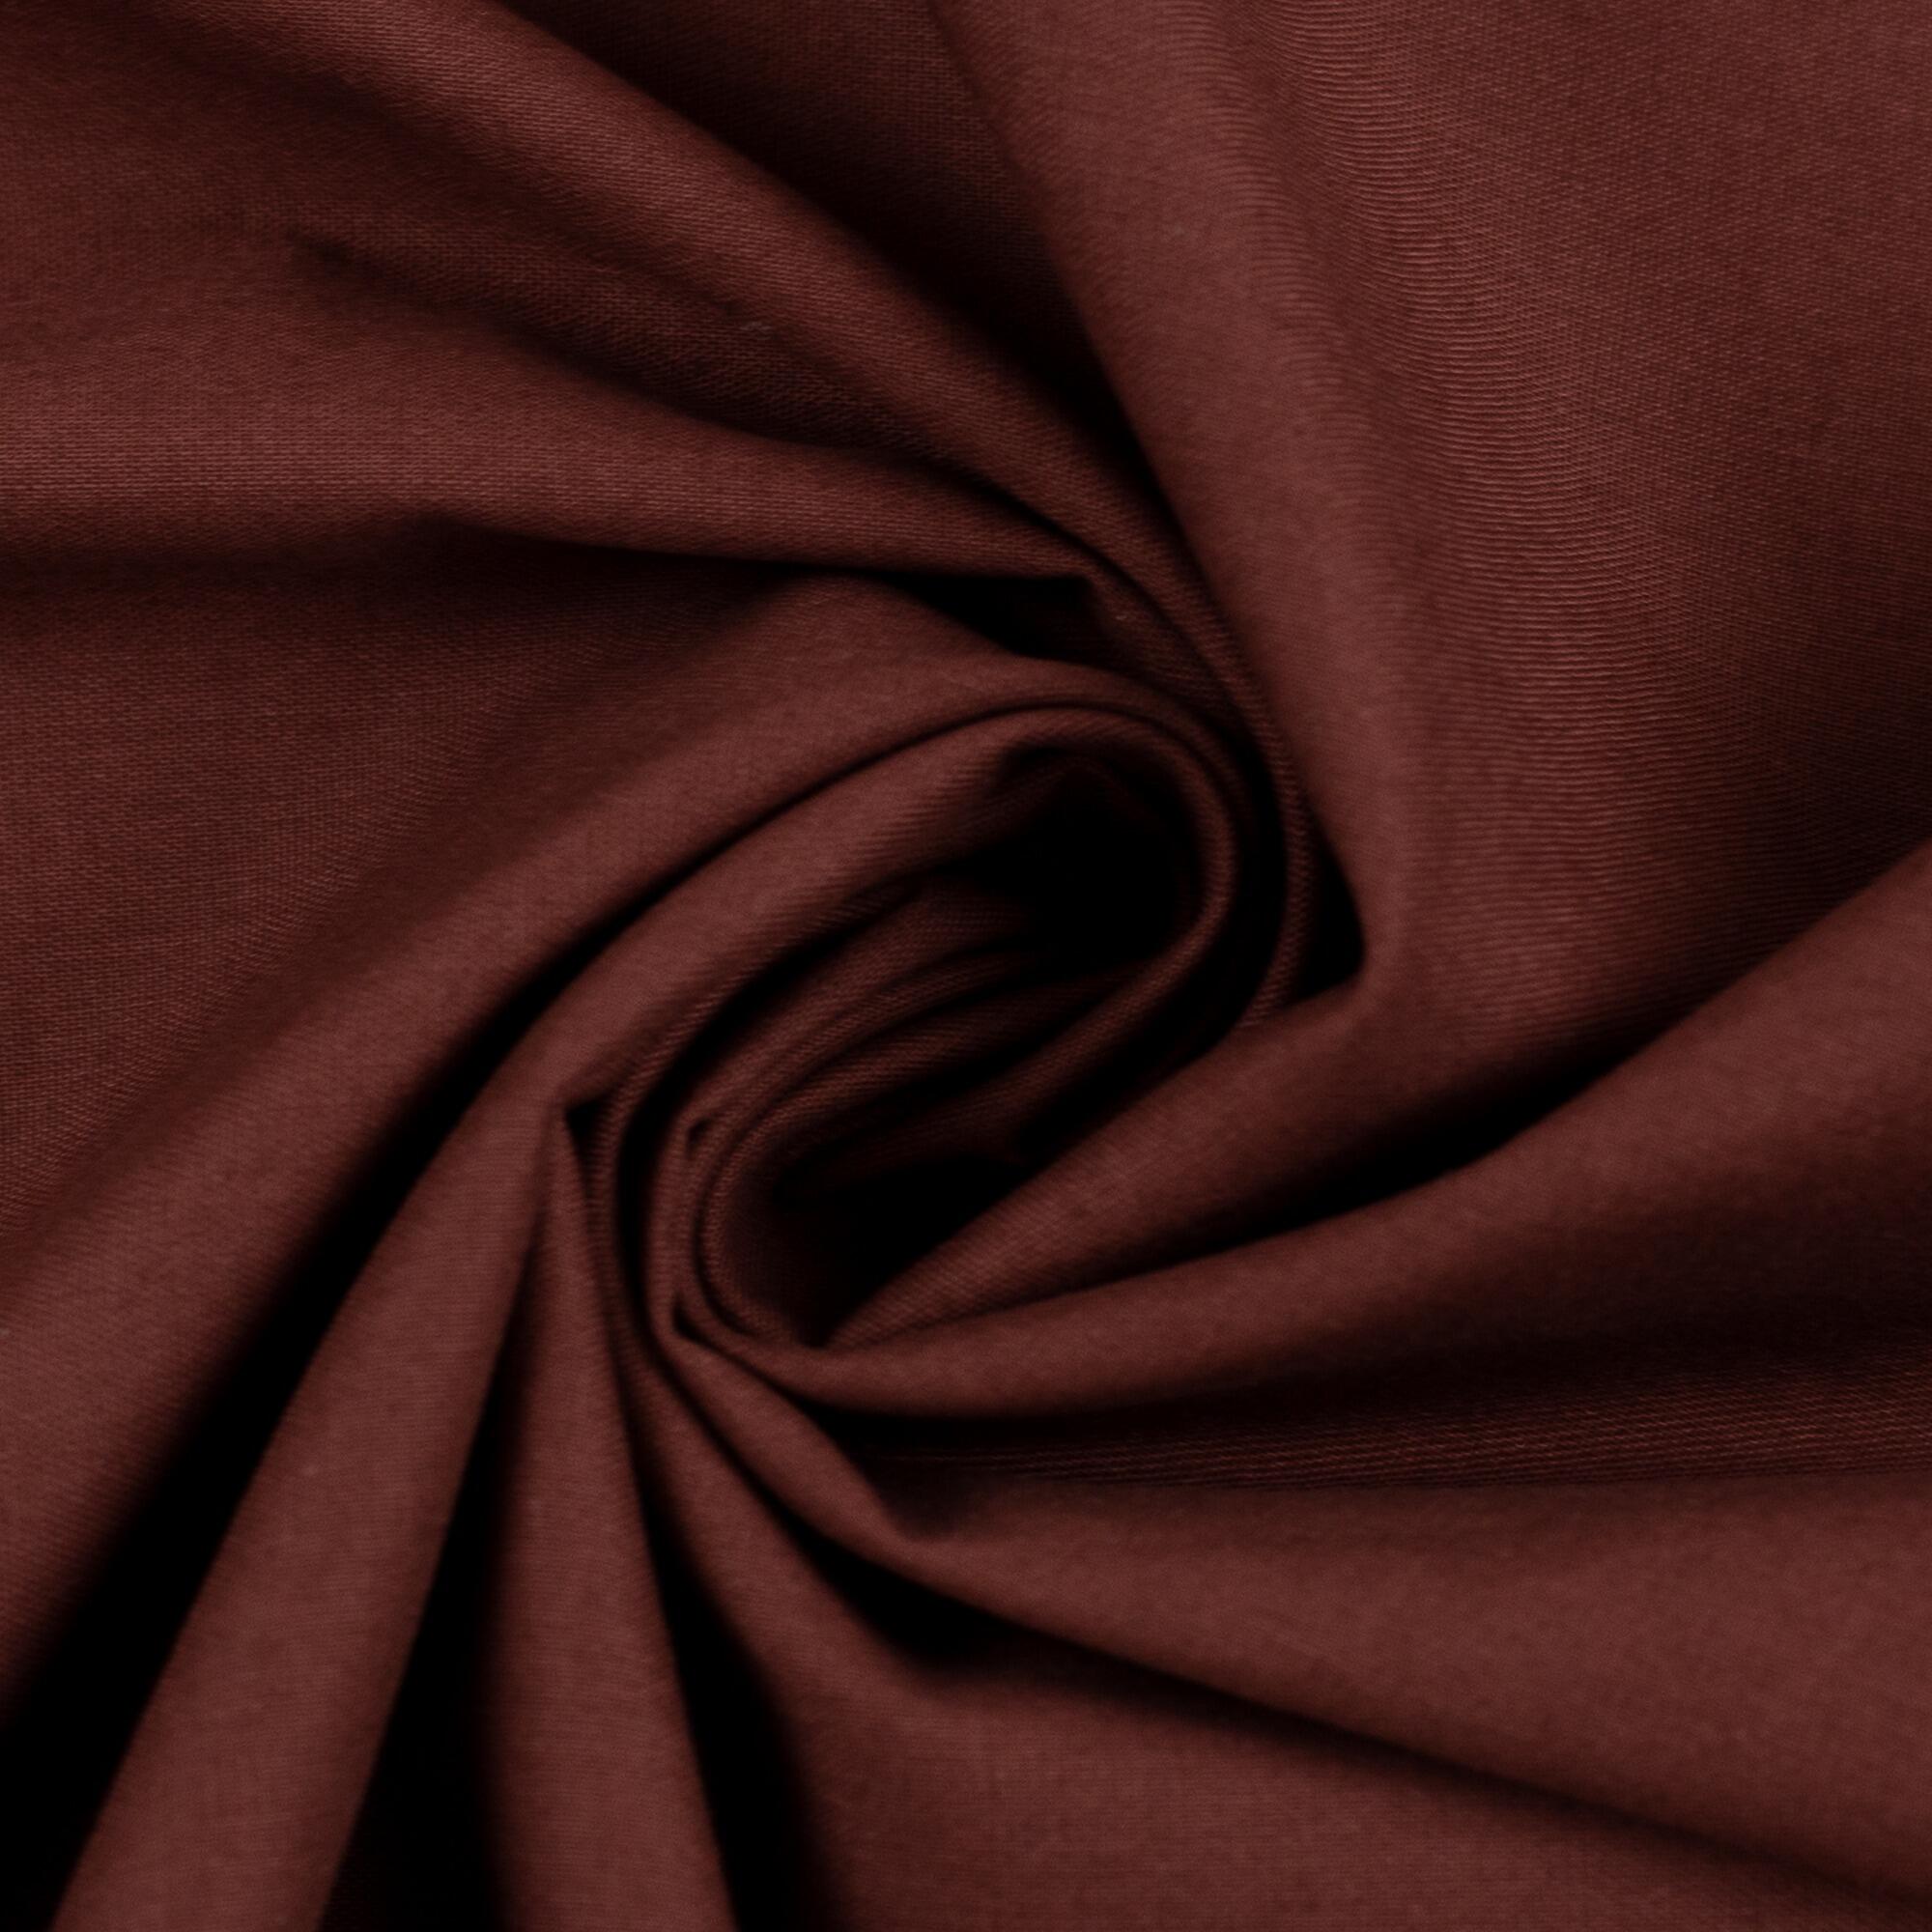 Plain dark brown woven cotton fabric